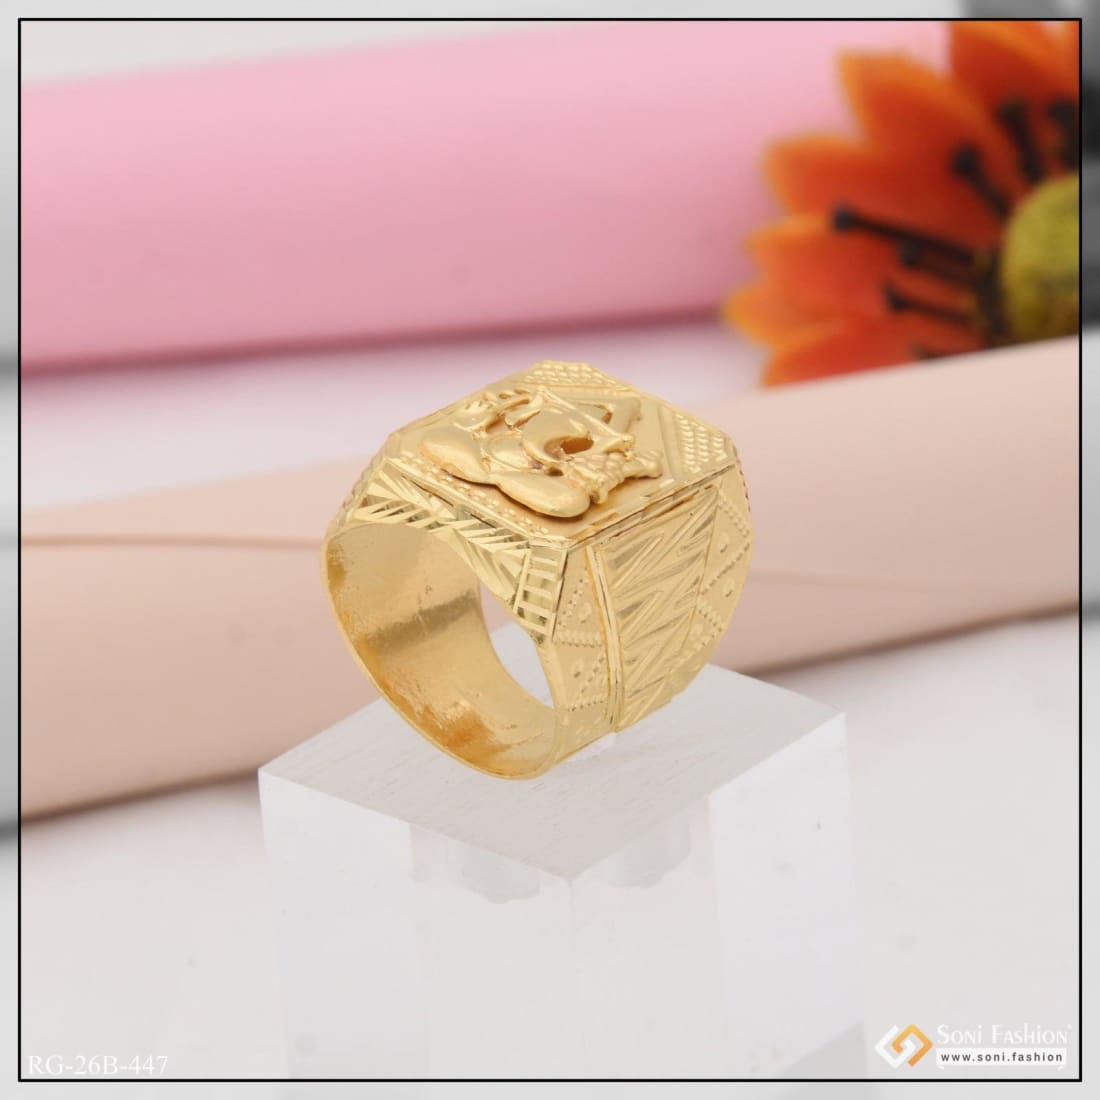 Buy quality Gold designer fancy ladies ring in Ahmedabad